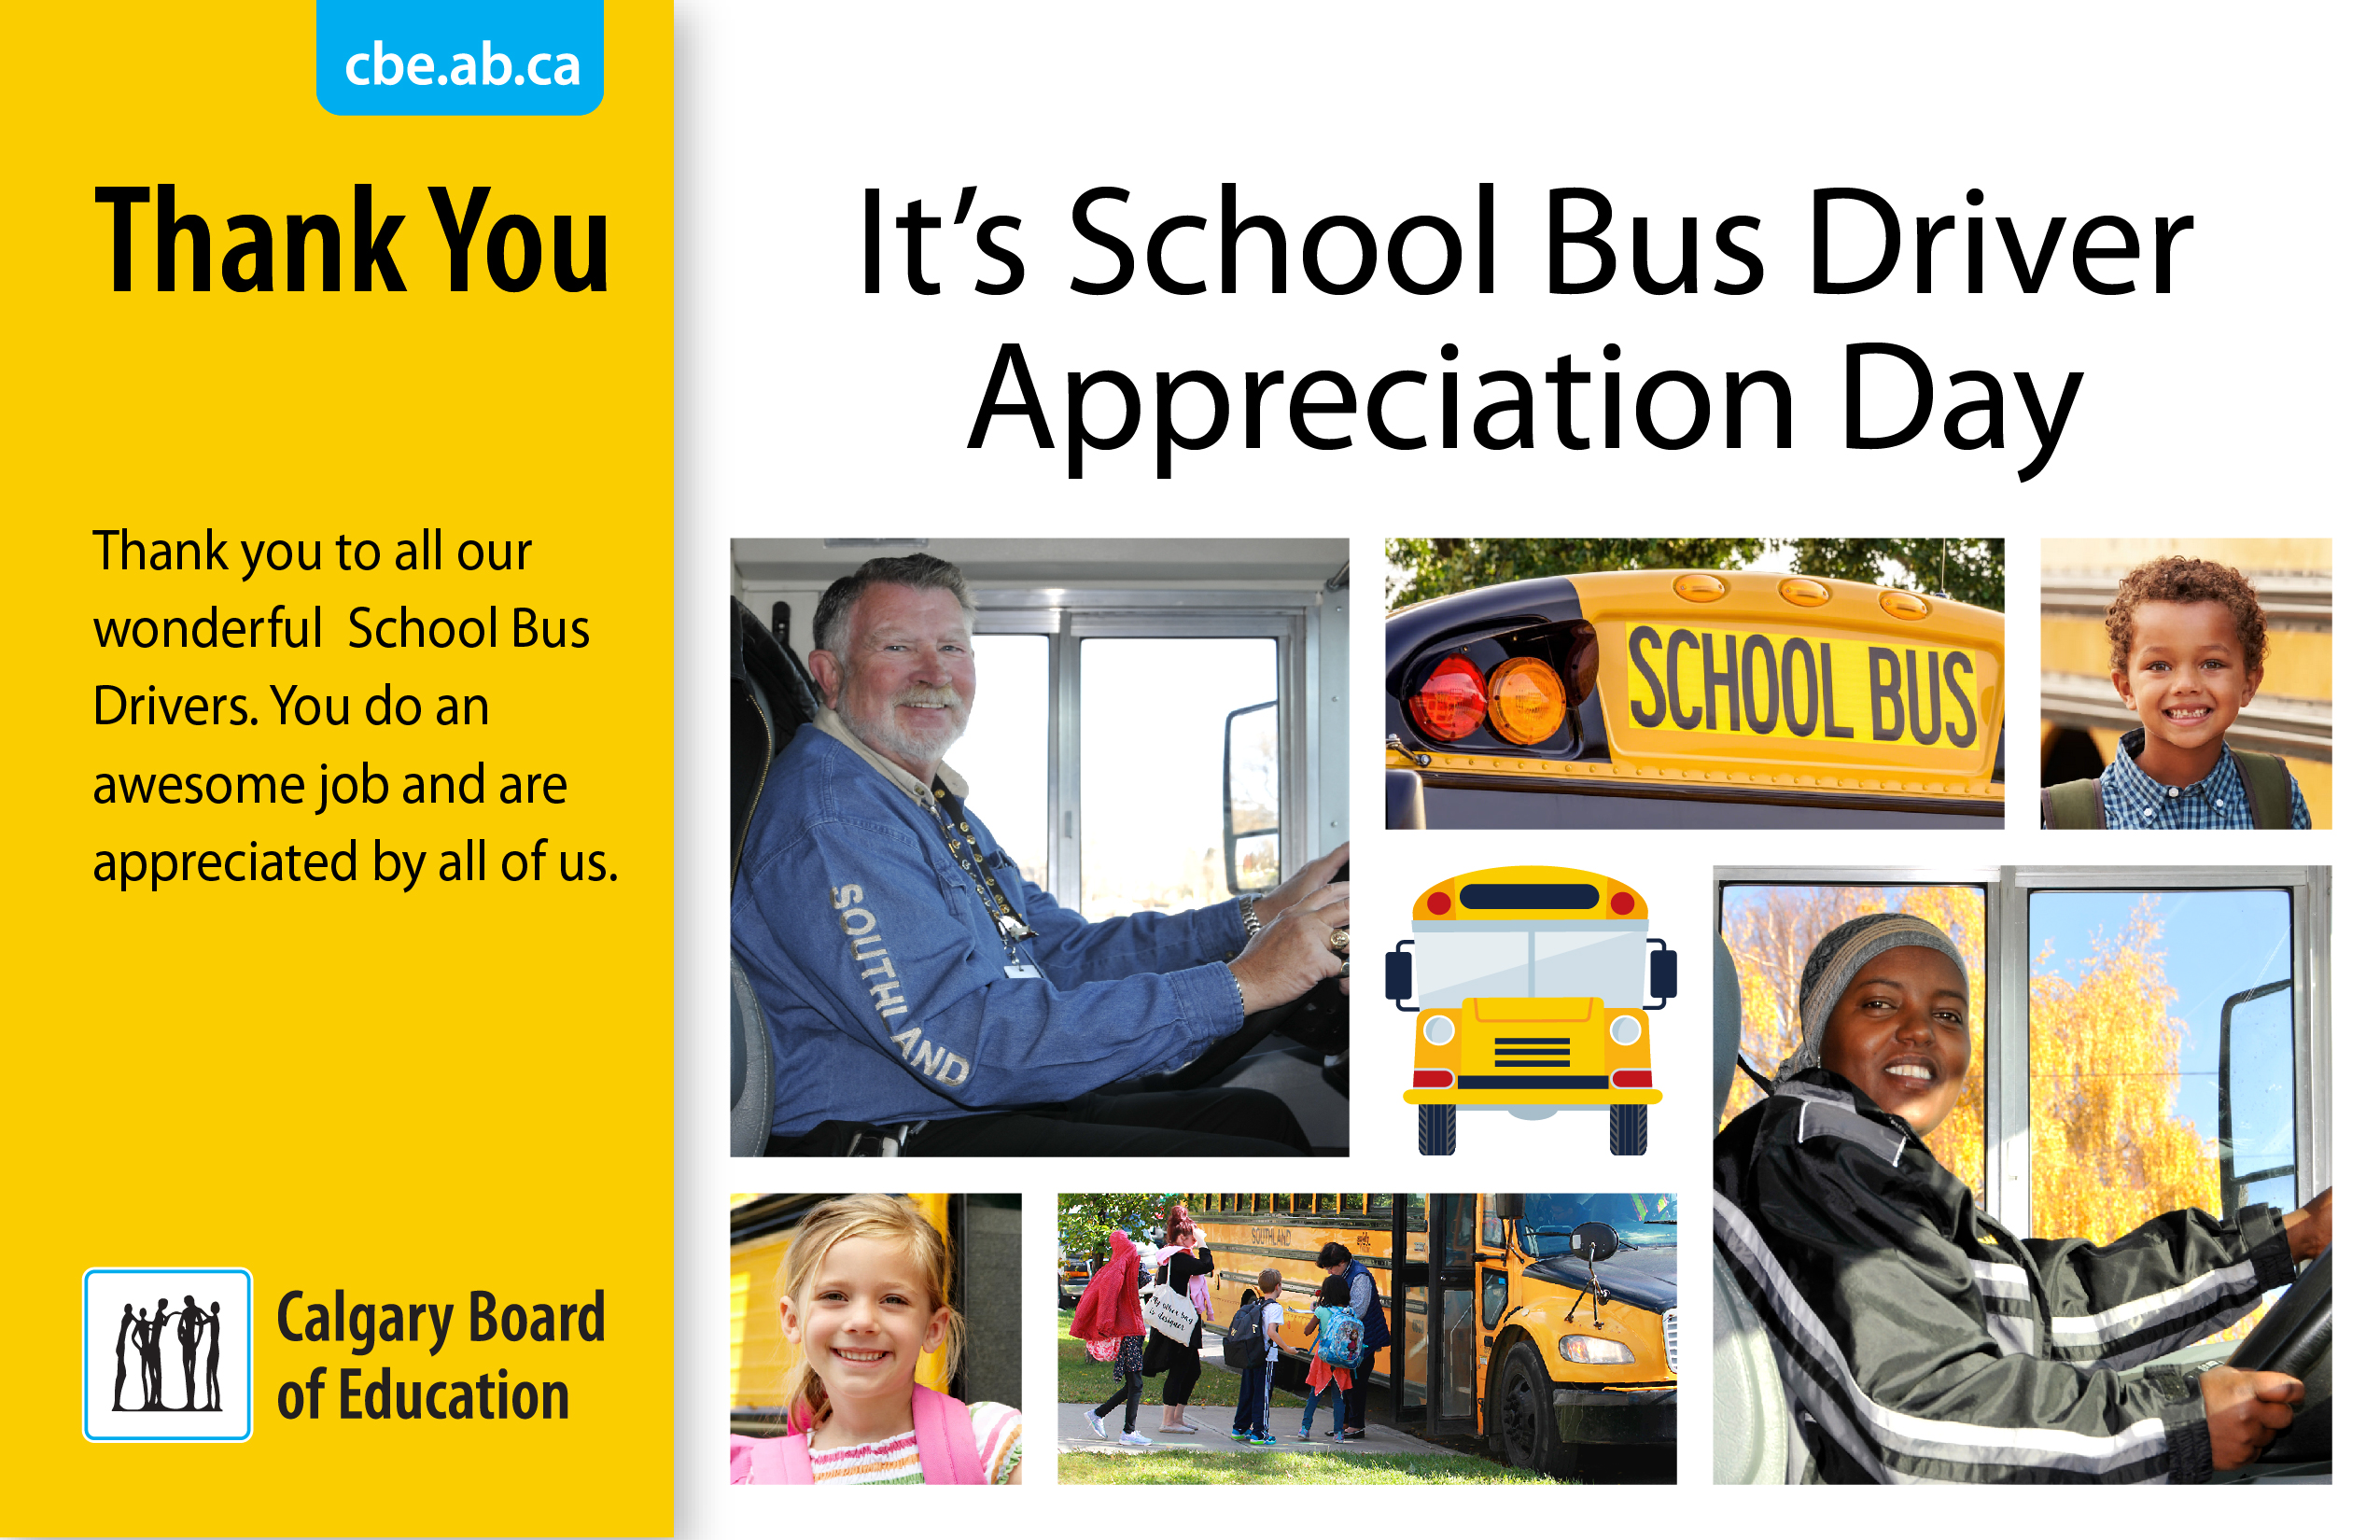 school-bus-driver-appreciation-day-news-centre-cbe